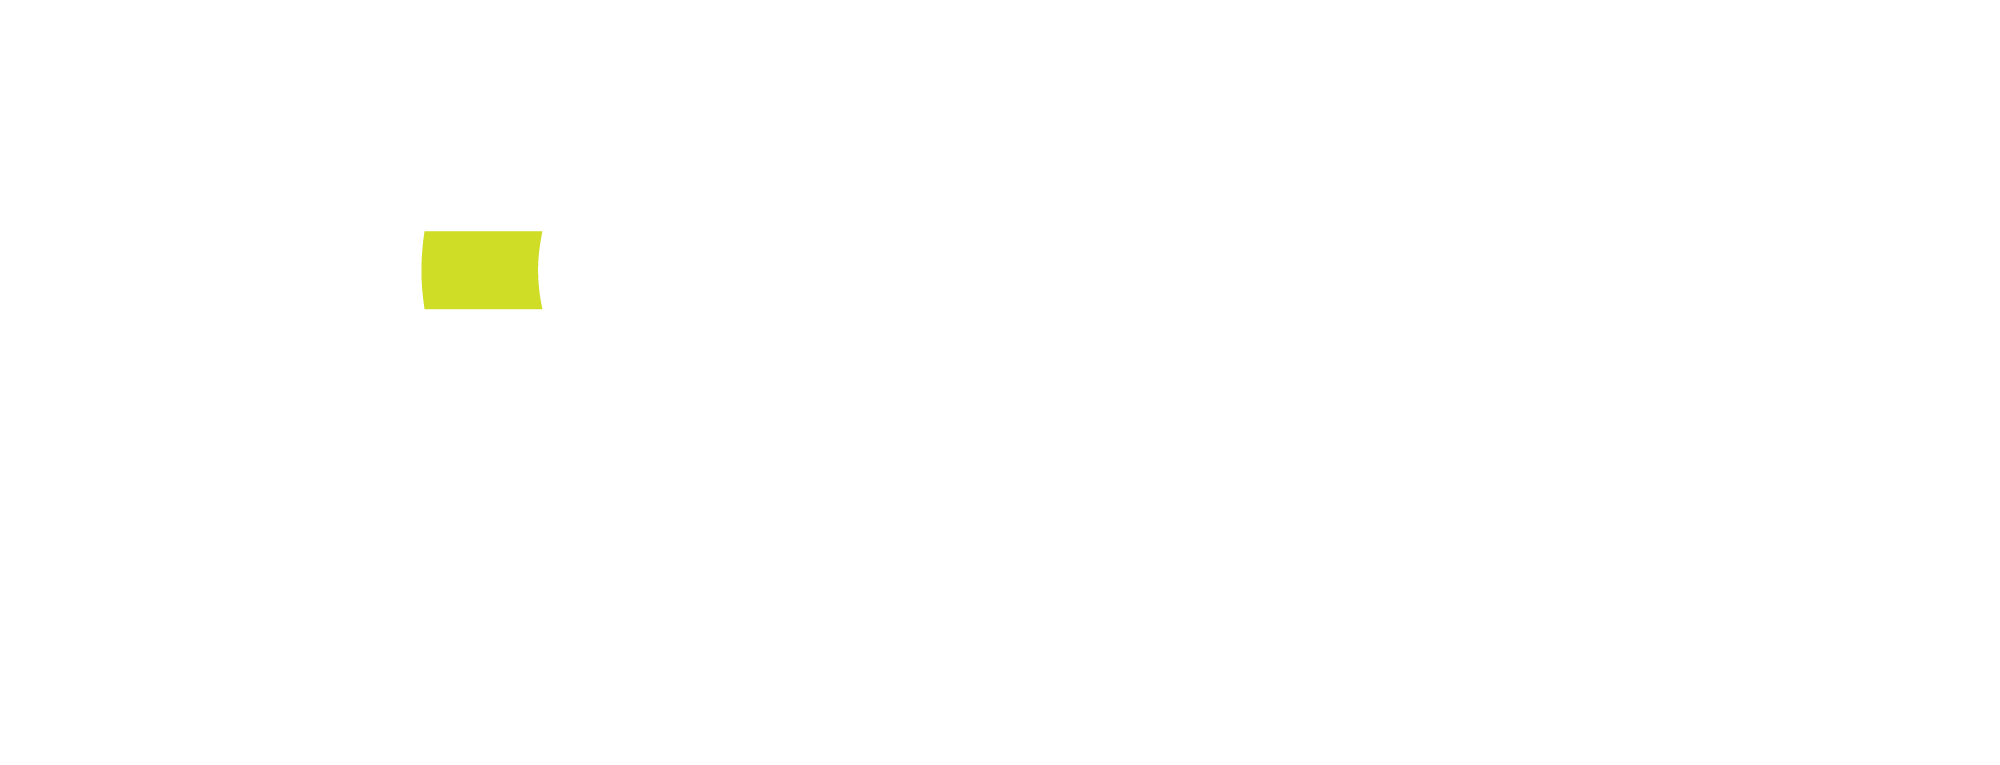 Core Talent Services white logo